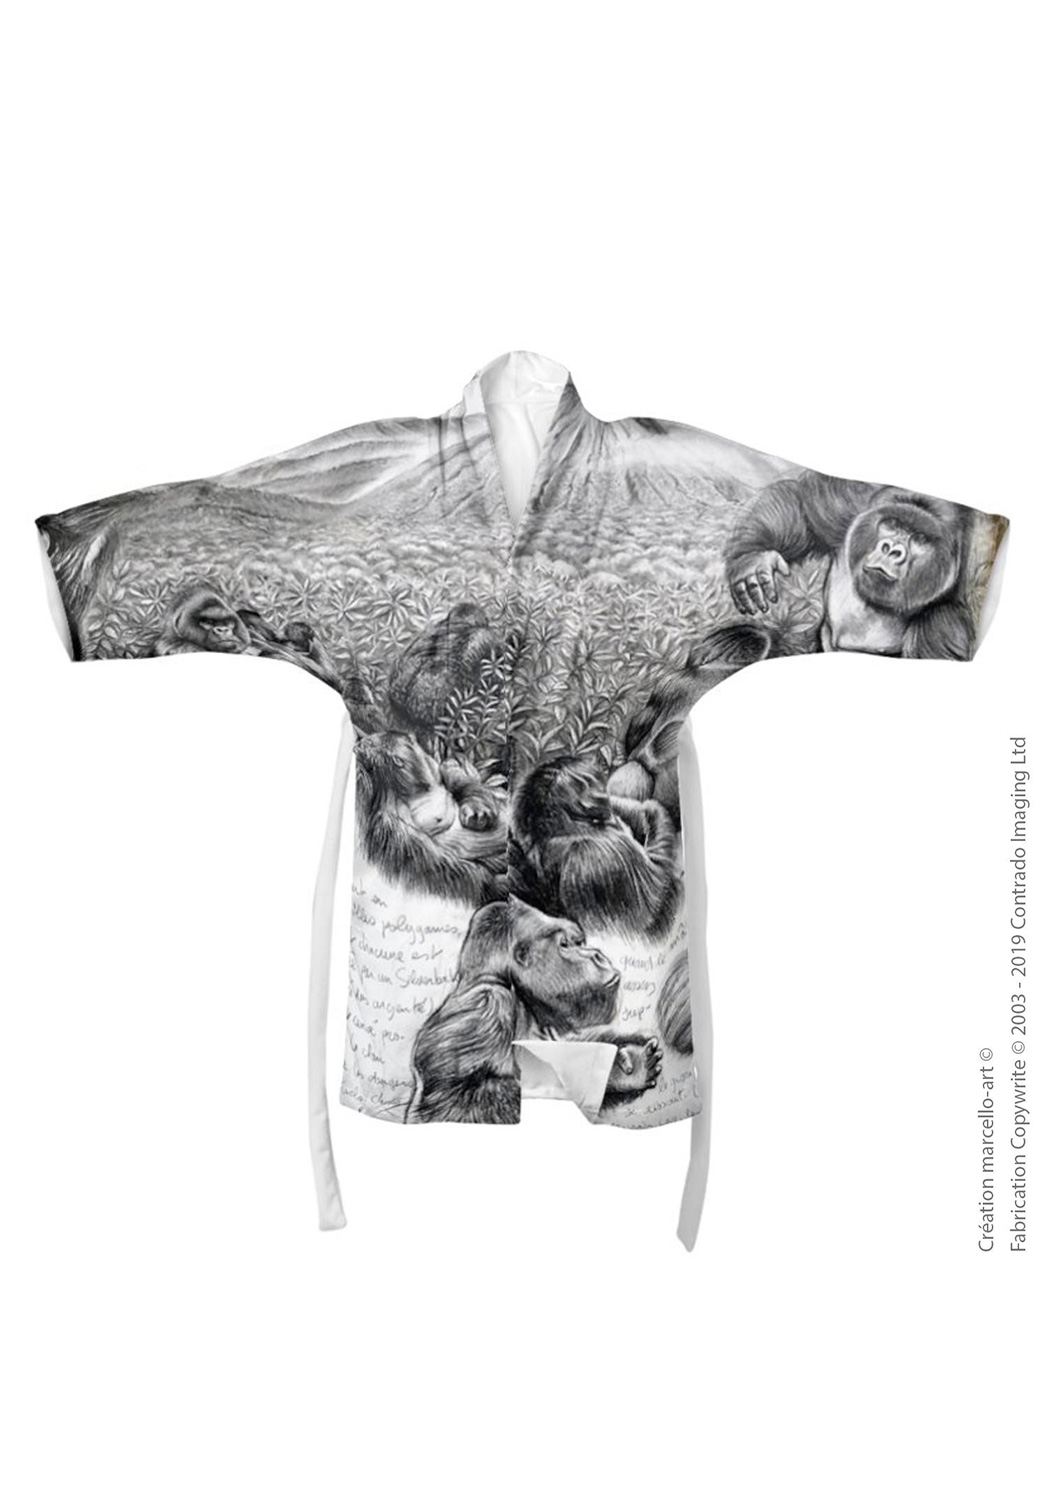 Marcello-art: Kimono Kimono 301 Virunga gorilla